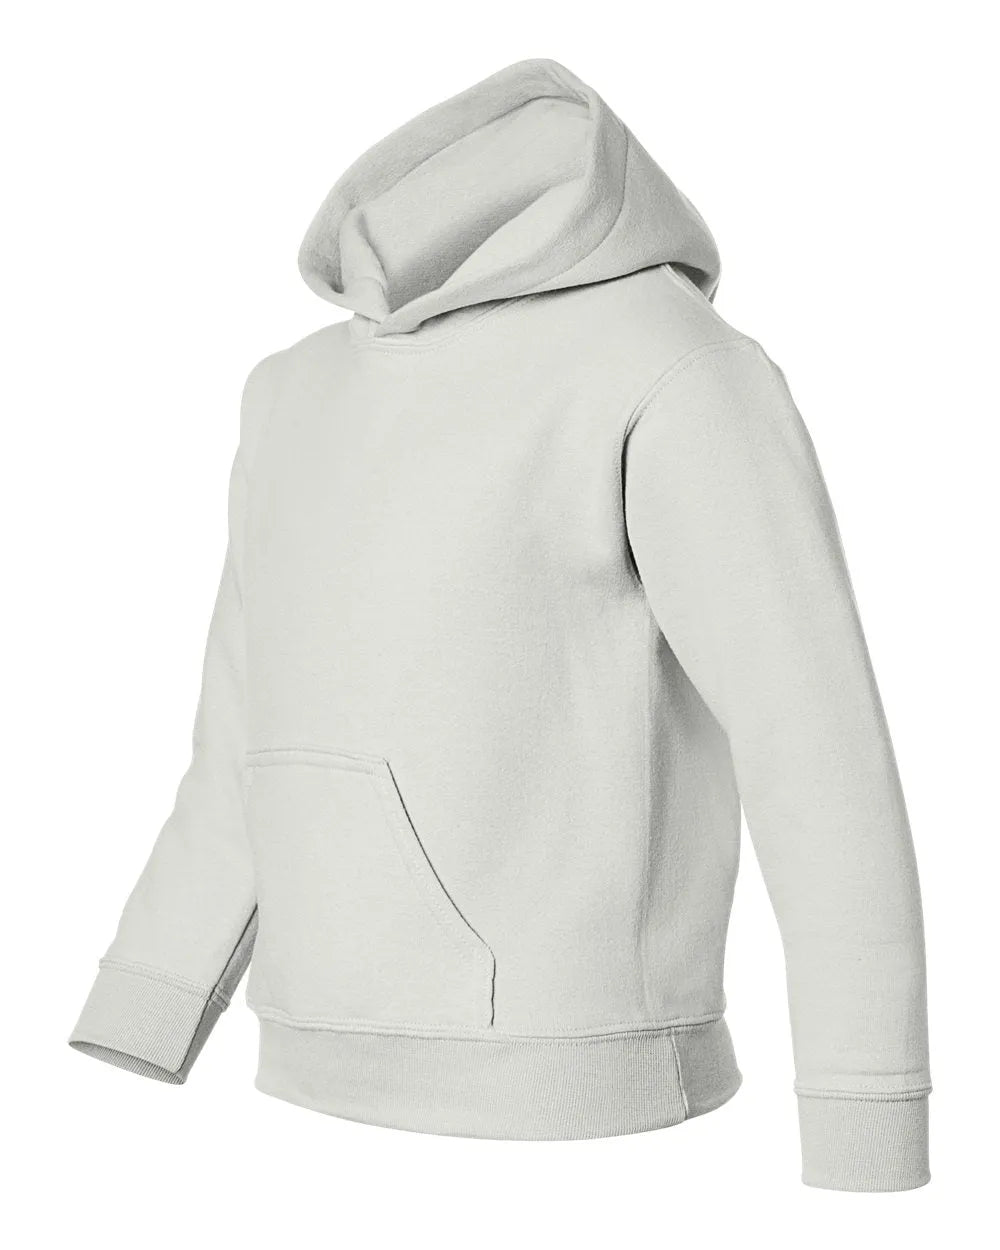 Heavy Blend™ Youth Hooded Sweatshirt - 18500B - Print Me Shirts